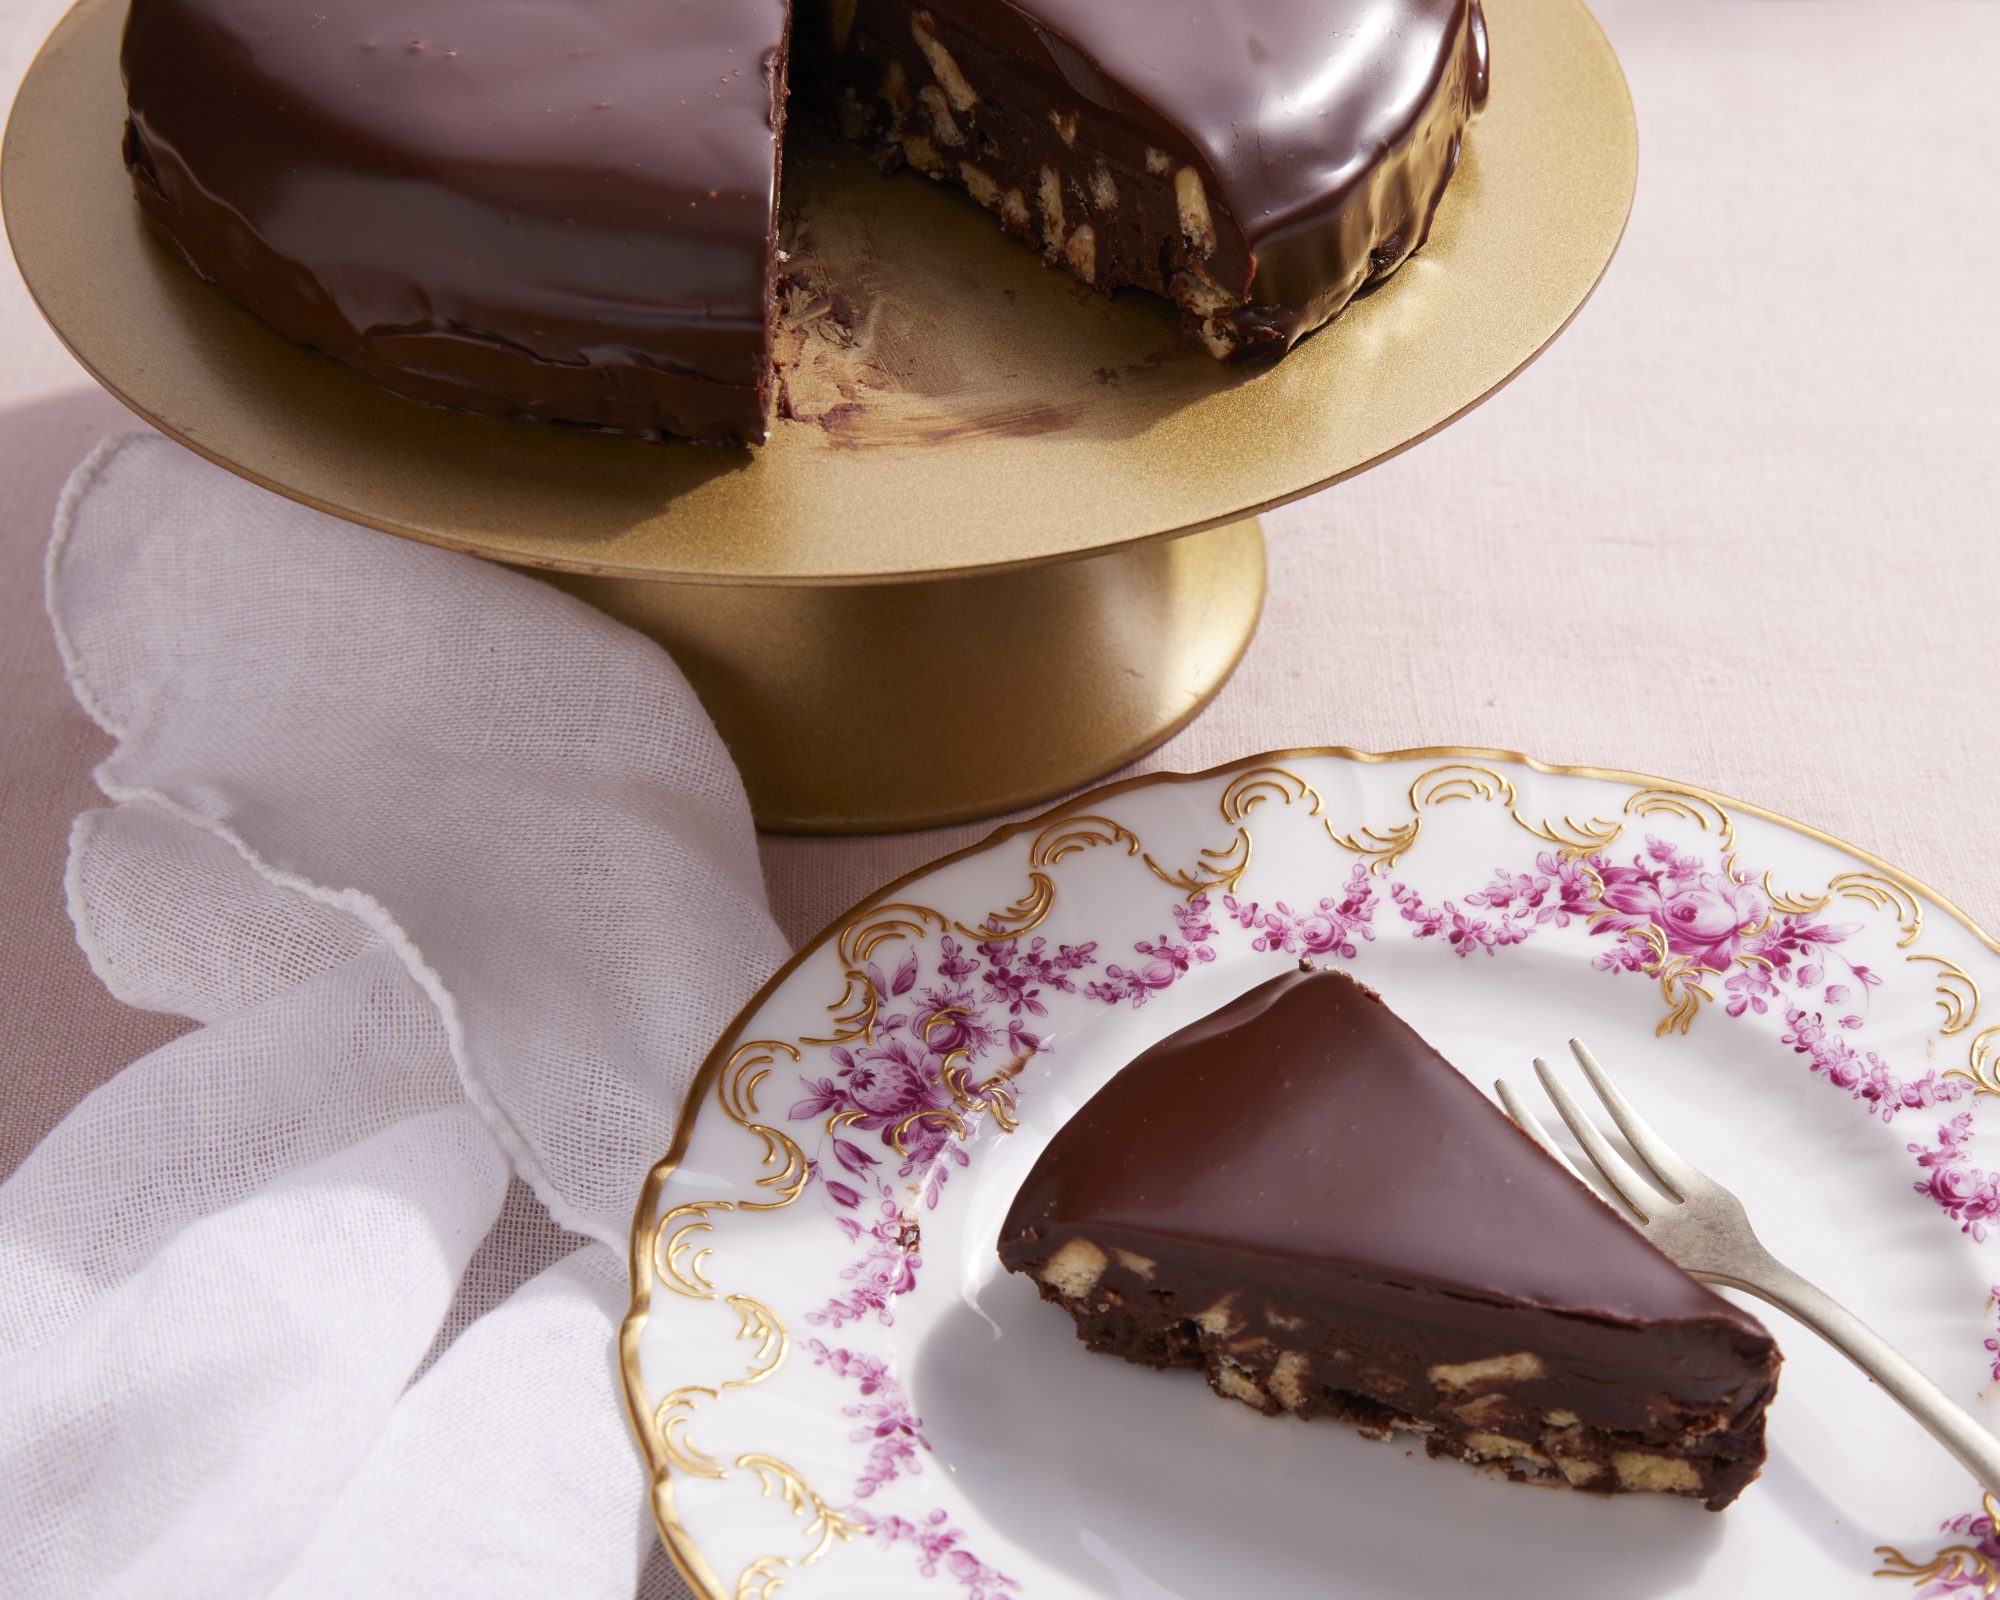 Kiksekage (Chocolate Cookie Cake) - Skandibaking